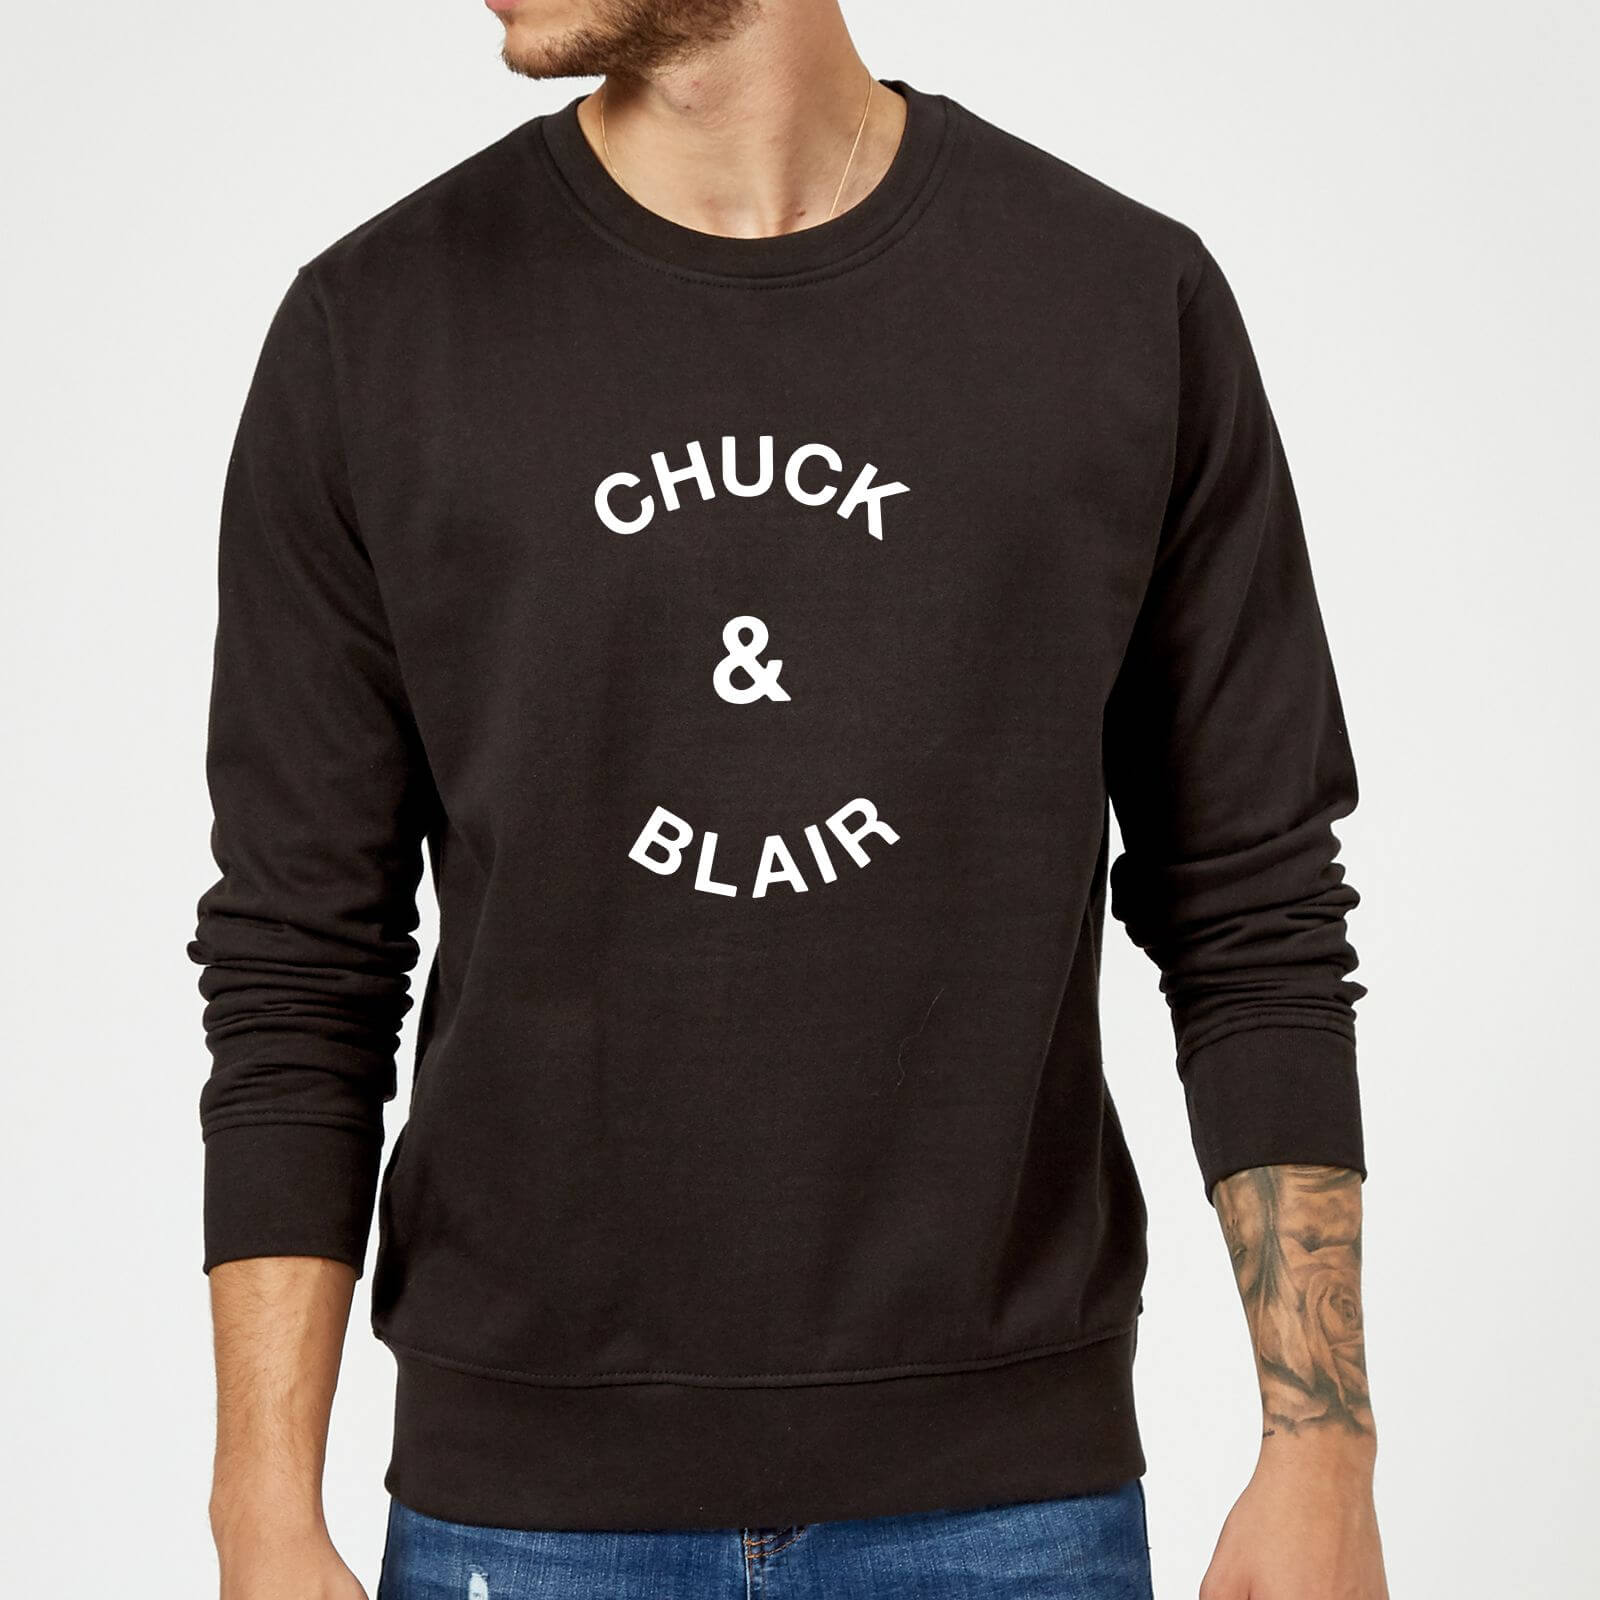 Chuck & Blair Sweatshirt - Black - M - Black